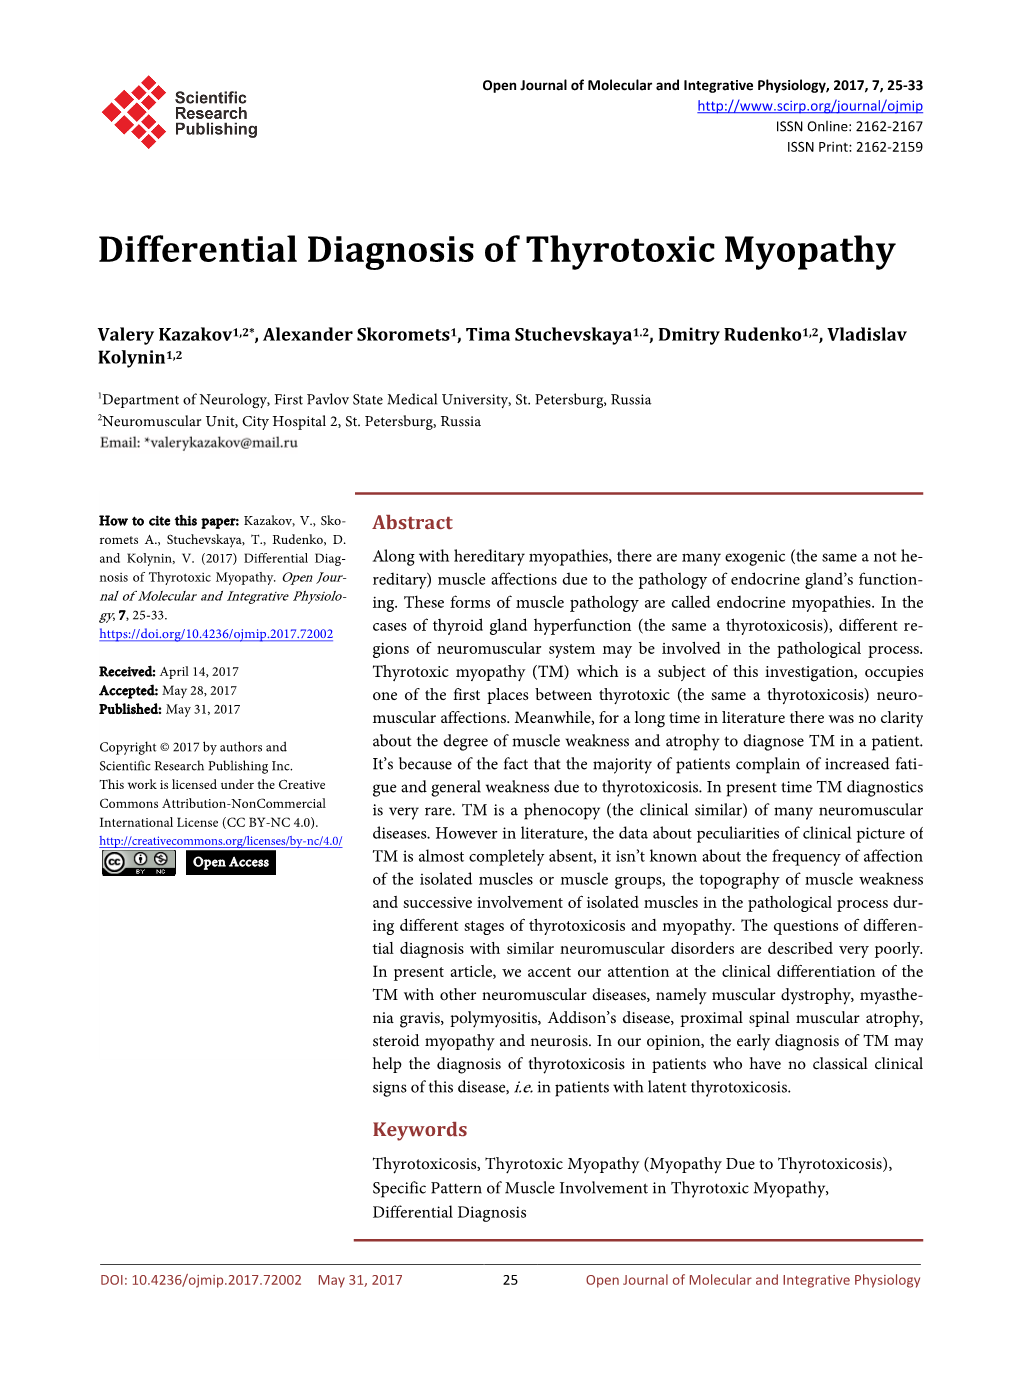 Differential Diagnosis of Thyrotoxic Myopathy